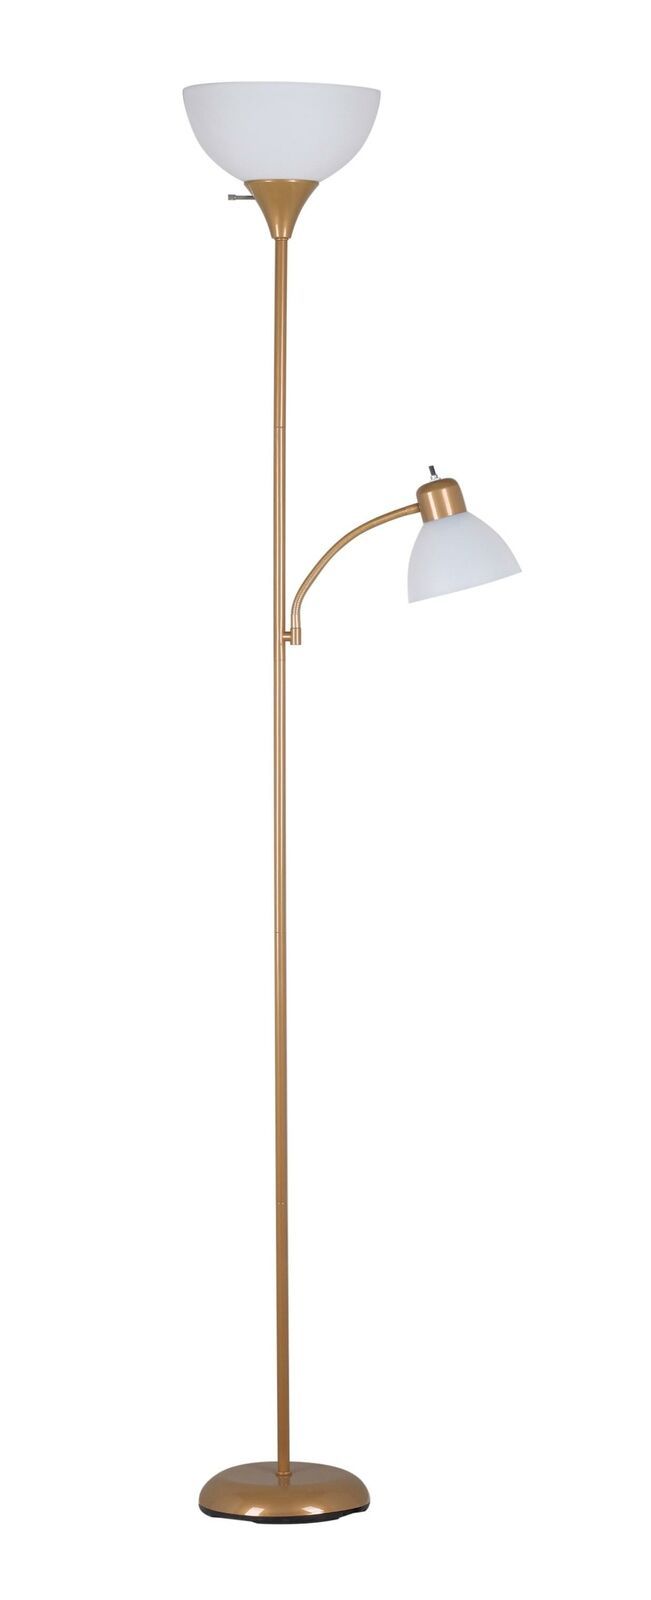 72 Inch Floor Lamp Reading Light Metal Uplight Stand Living Room Bedroom |  Ebay For 72 Inch Floor Lamps (Photo 10 of 15)